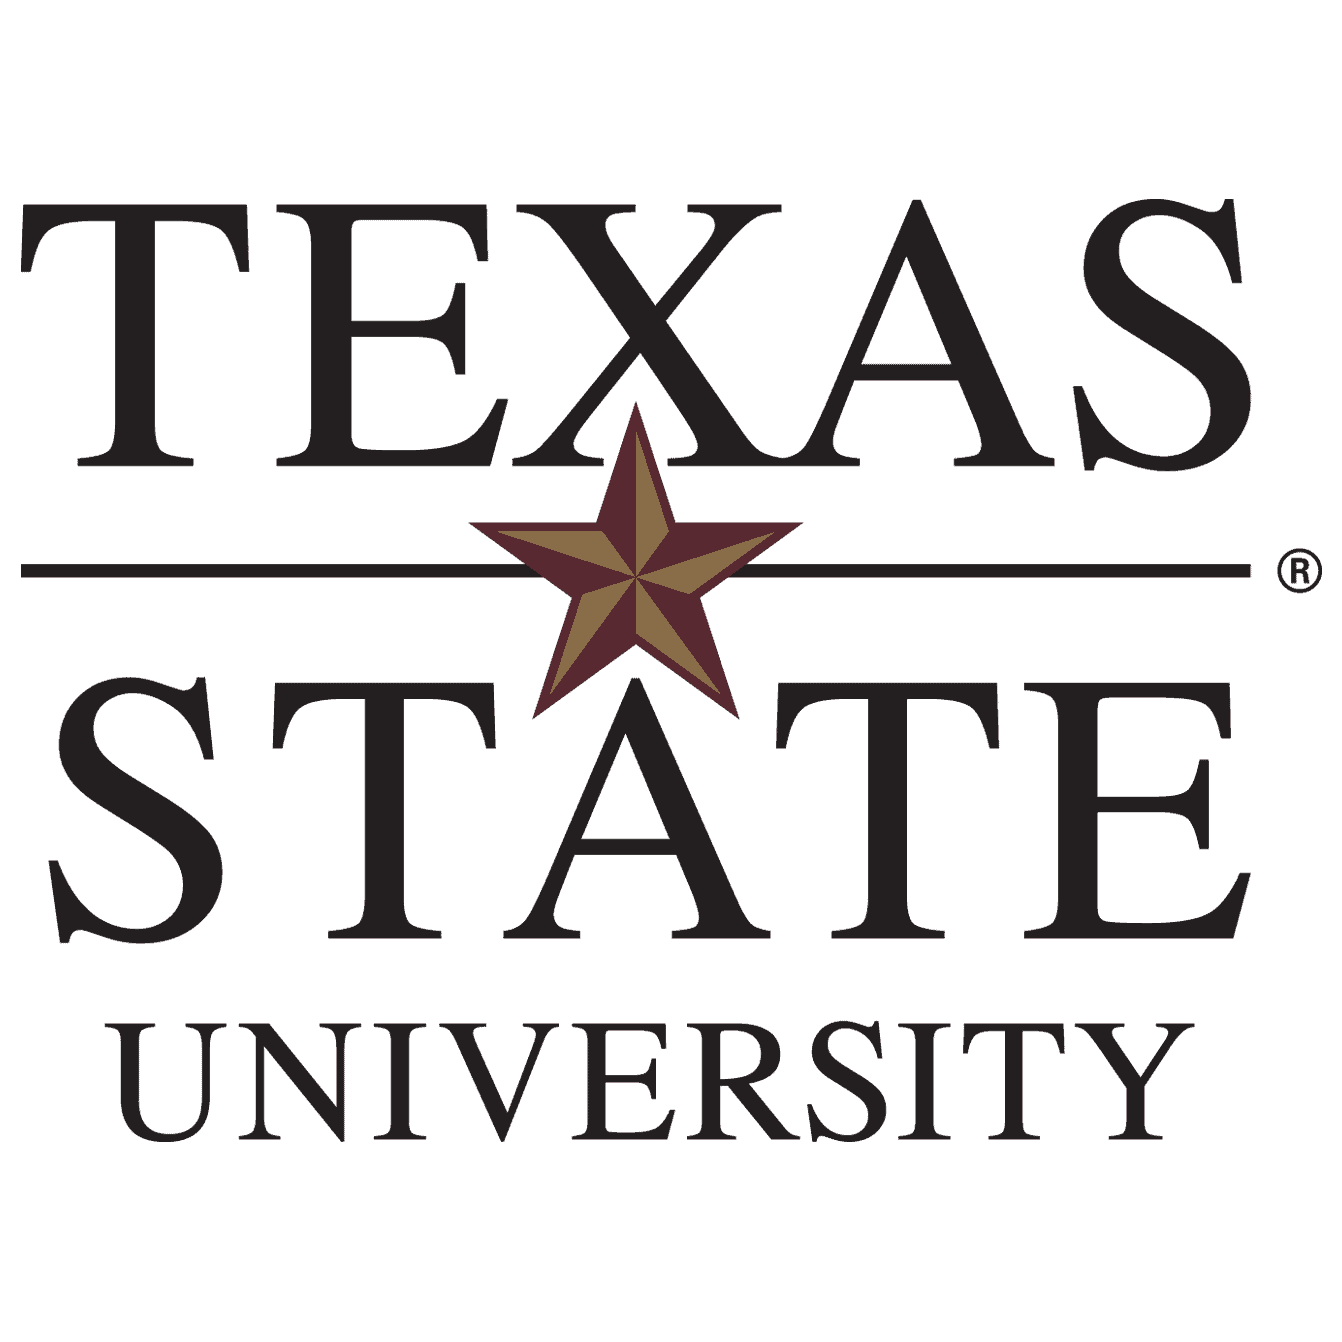 TSU   Texas State University Logo png